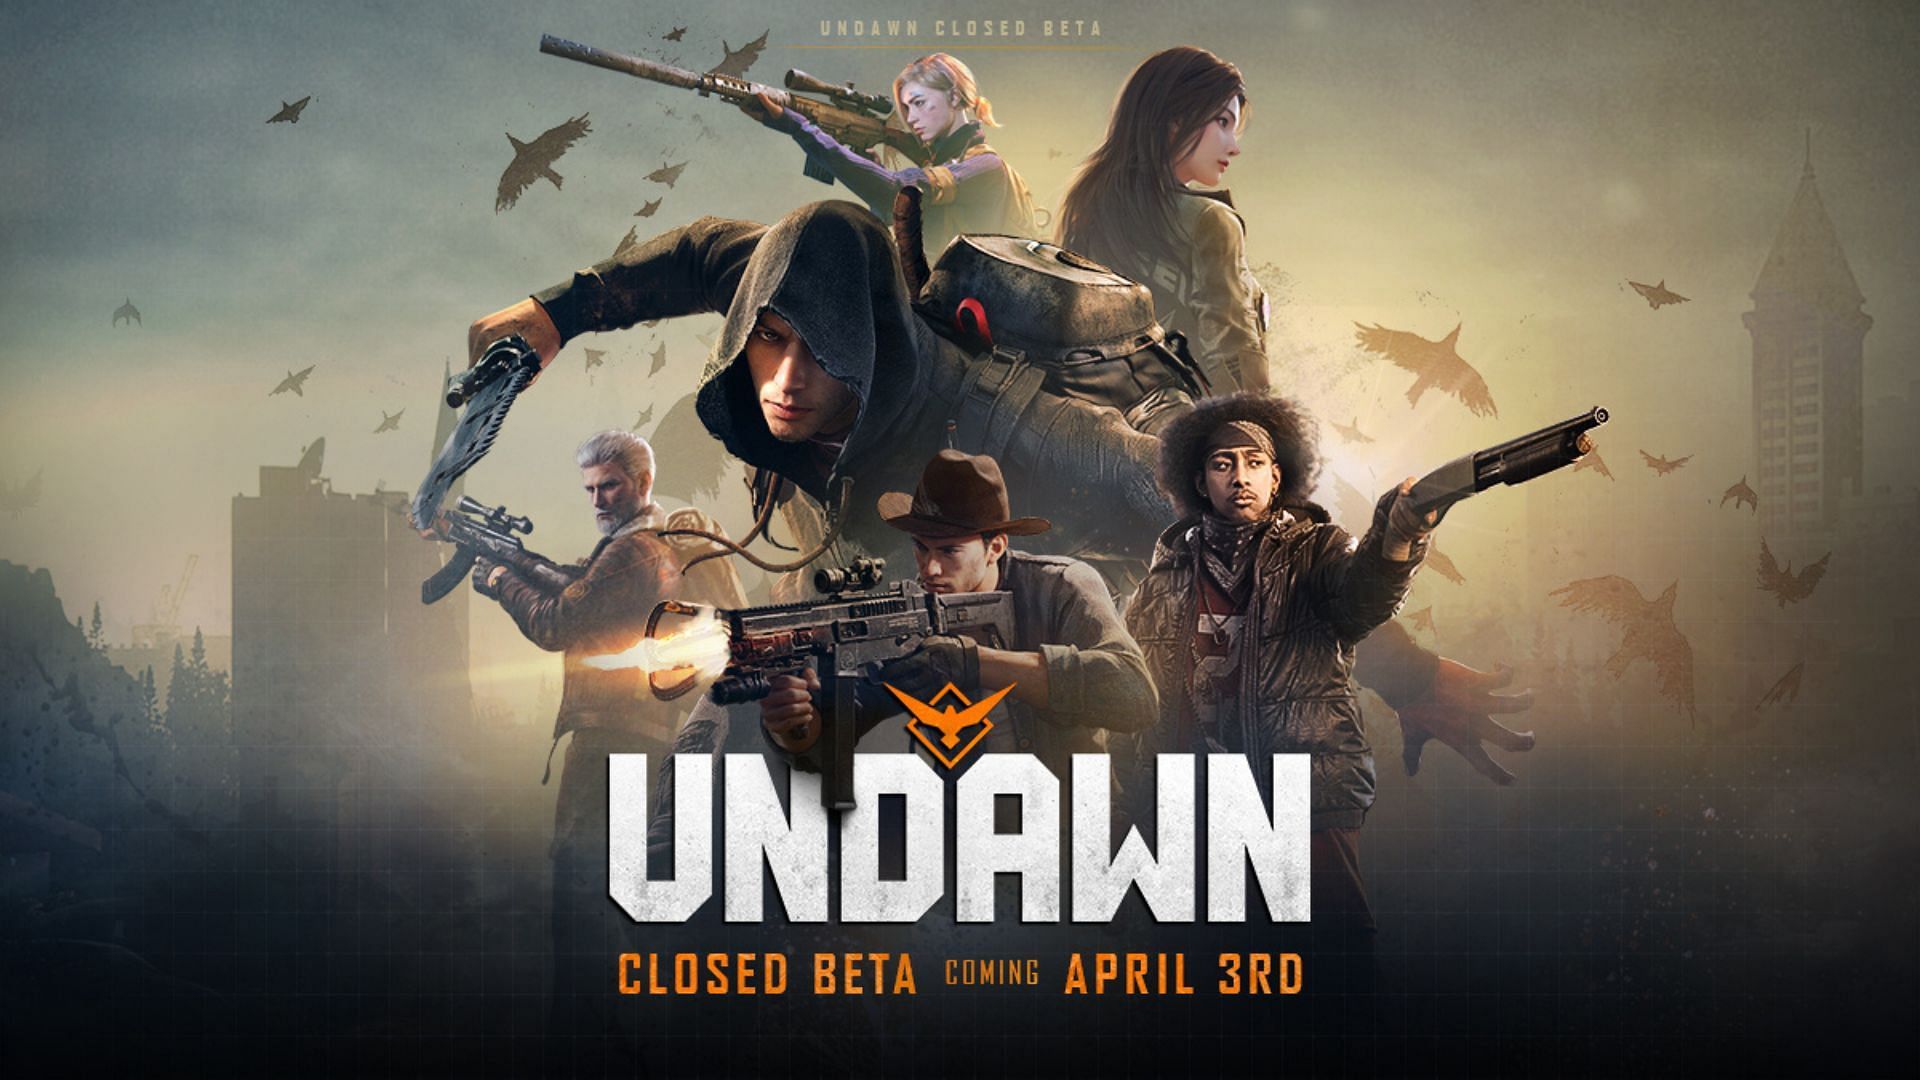 Undawn Closed Beta Test will begin on April 3 (Image via Twitter/Undawn)